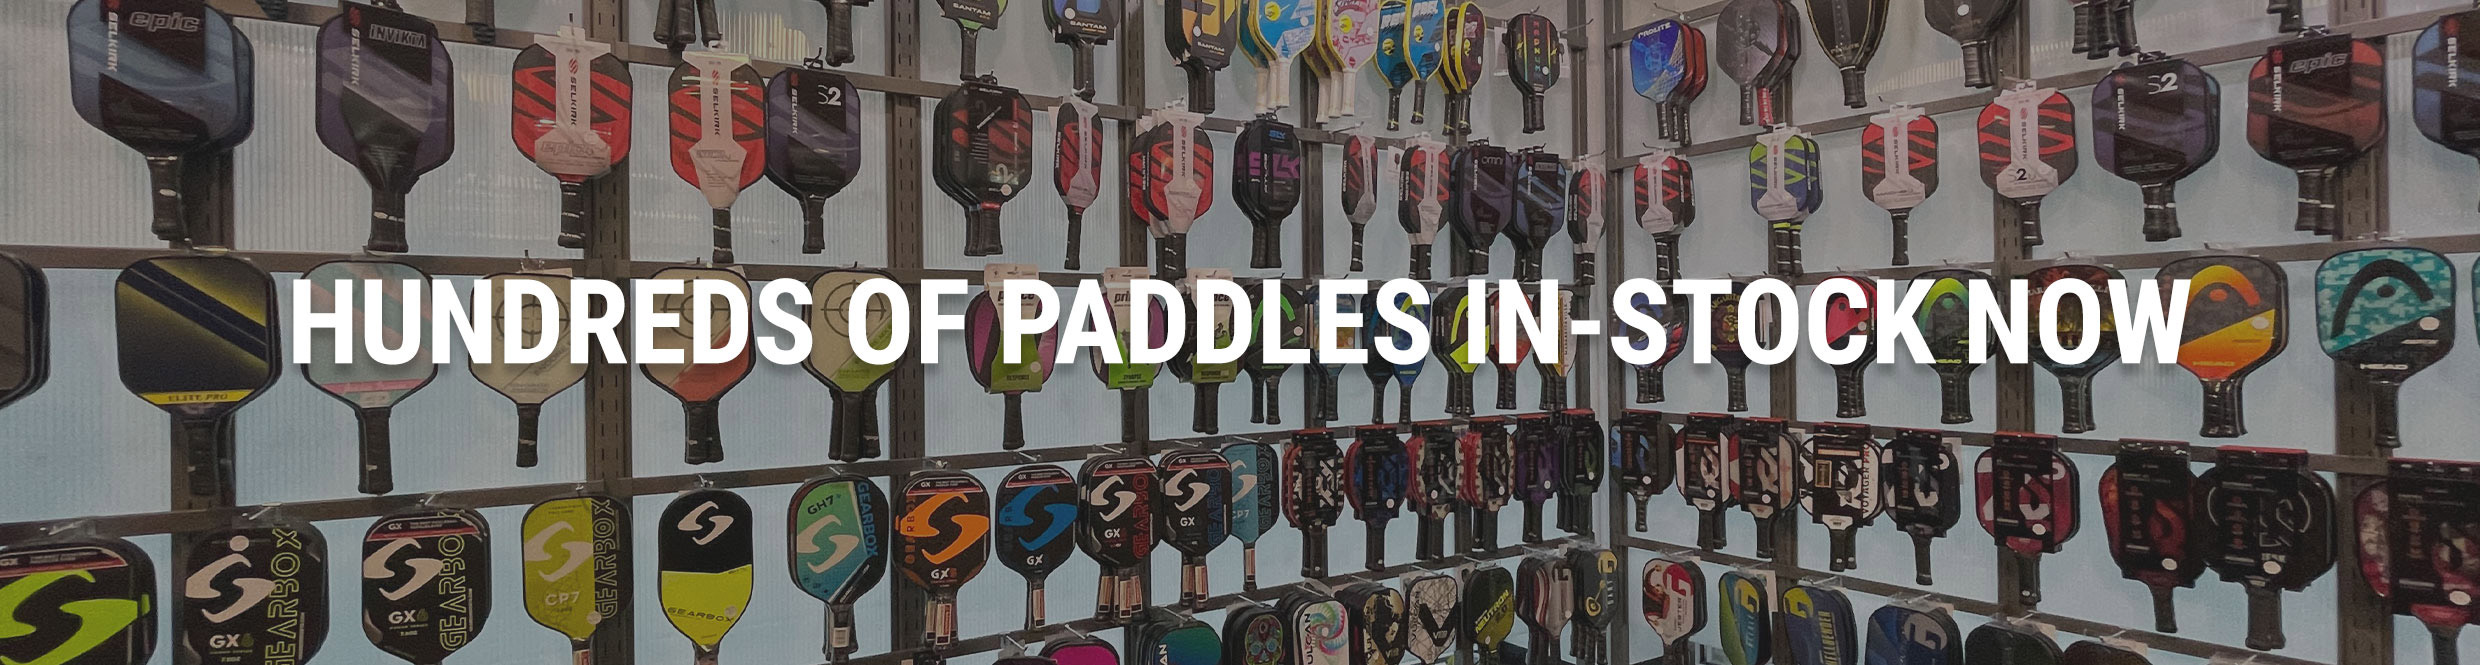 Franklin Pickleball Paddles